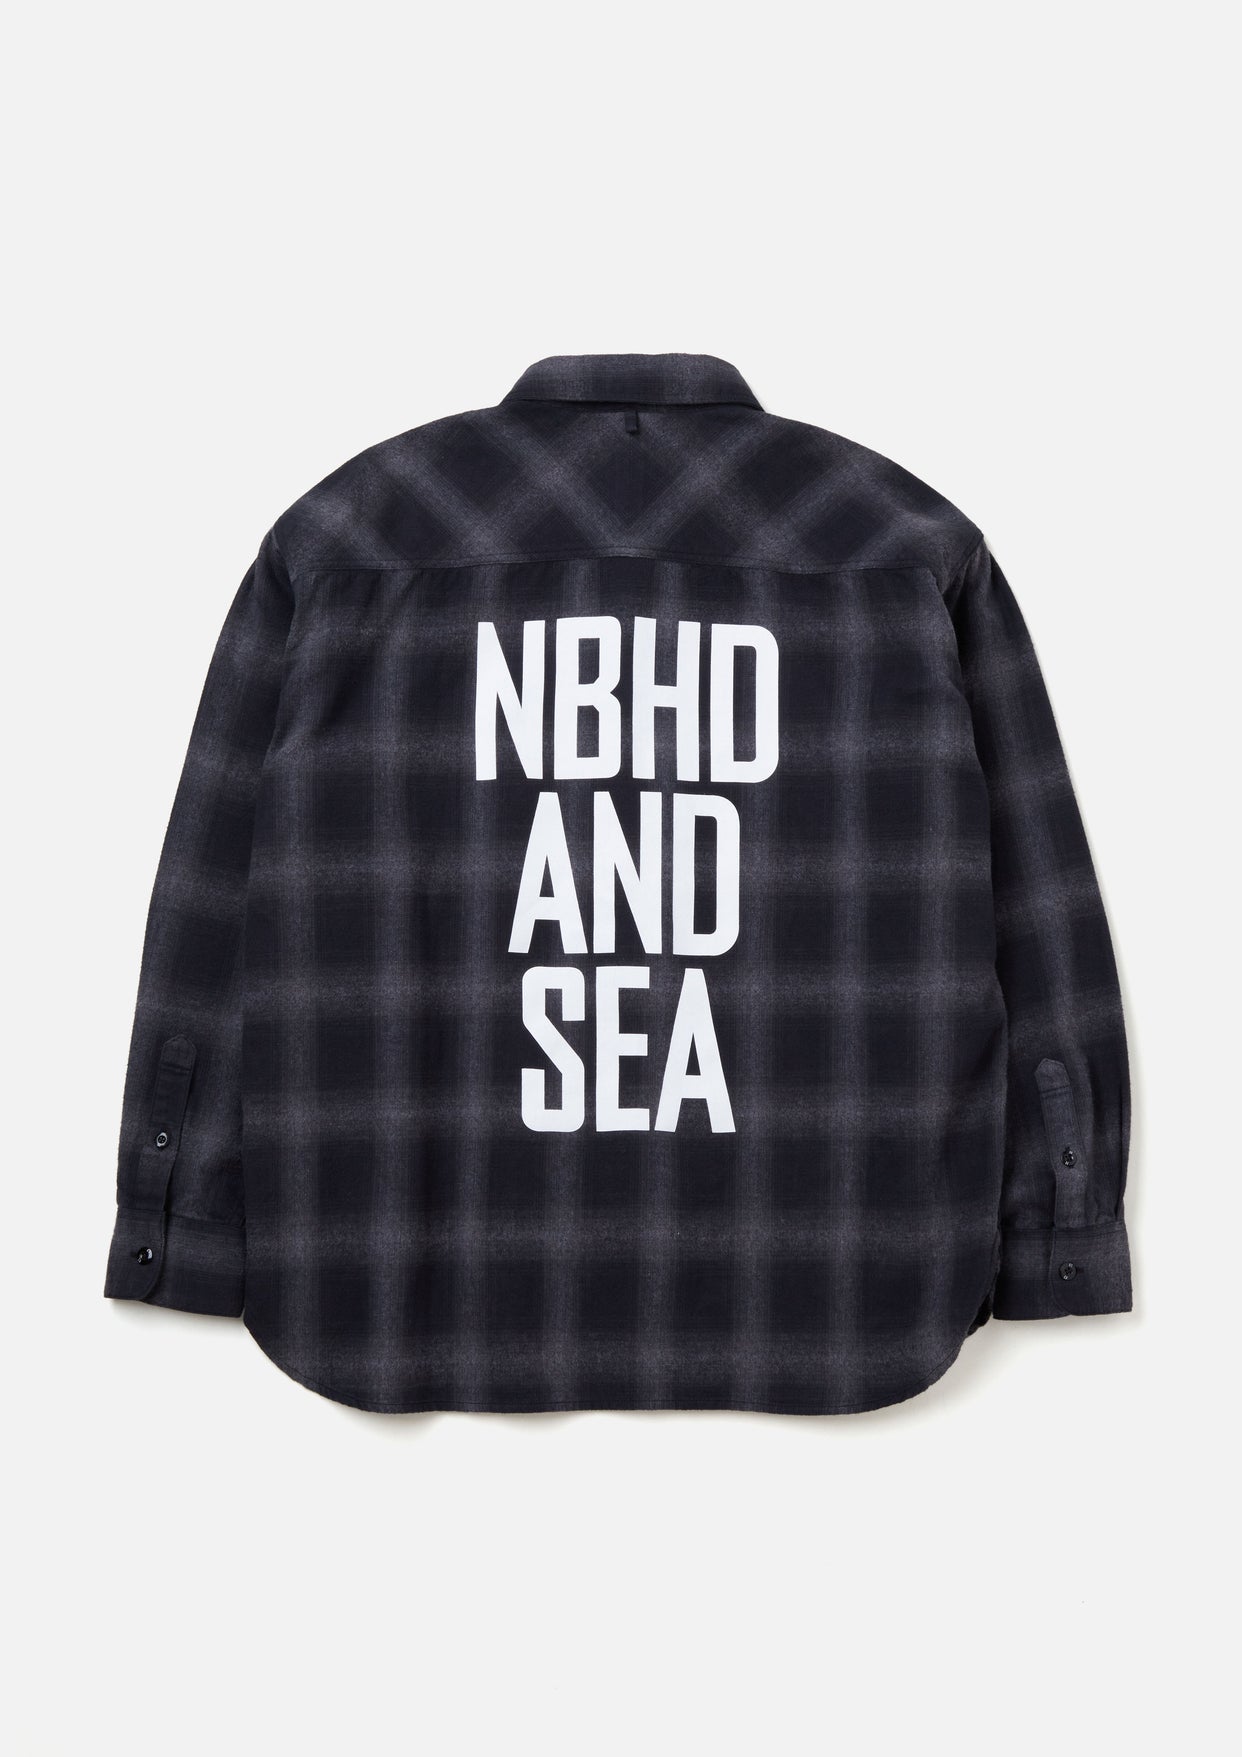 WIND AND SEA  NEIGHBORHOOD shirts